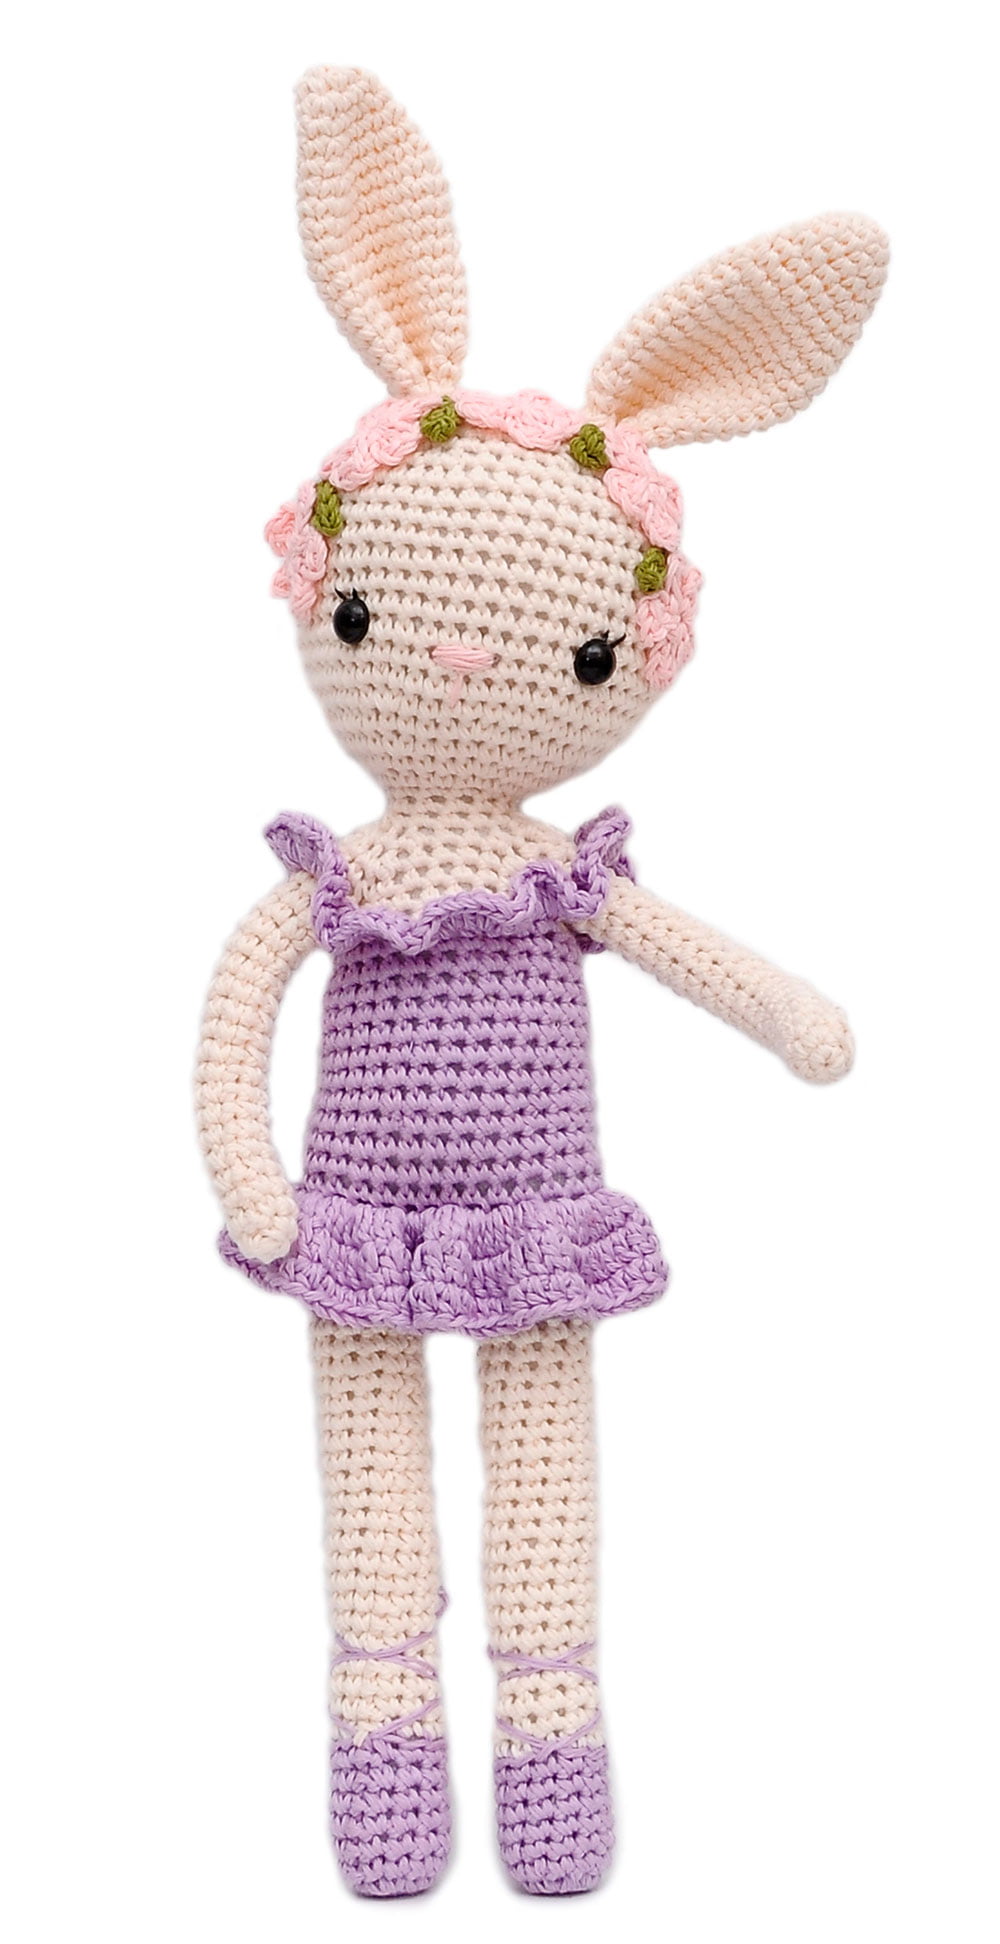 Handmade Crochet Doll Male Nurse